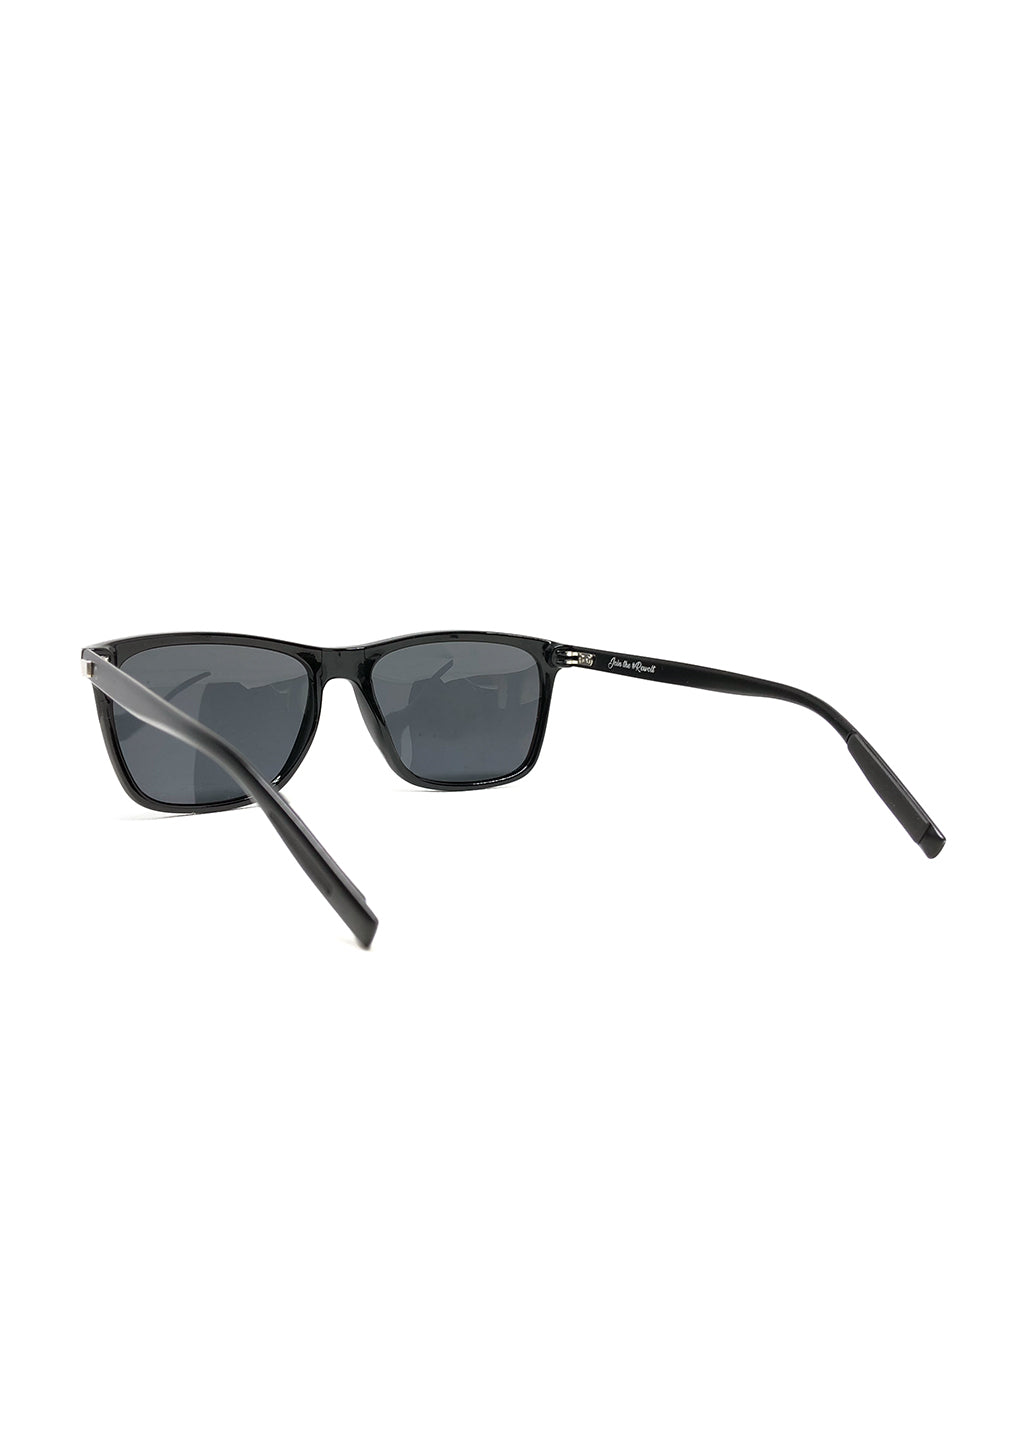 Monti Wayfarer sunglasses - Details